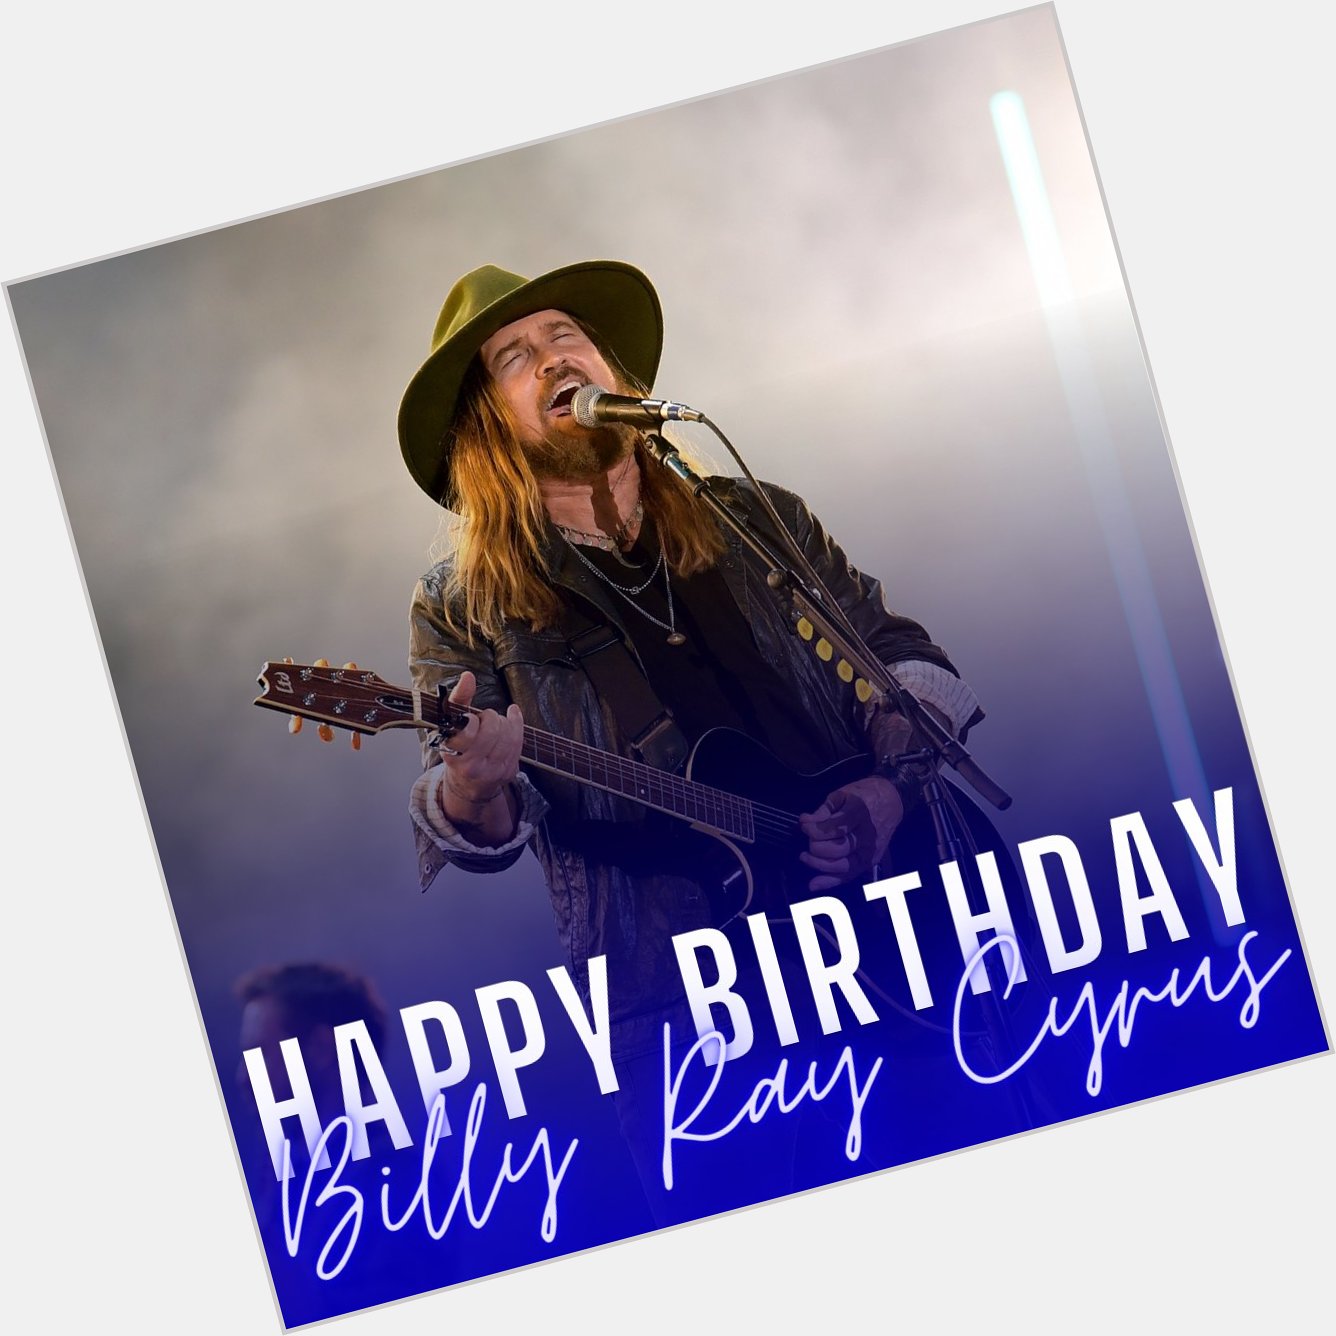 Happy Birthday Celebrate by listening to Billy Ray Cyrus Radio here:  